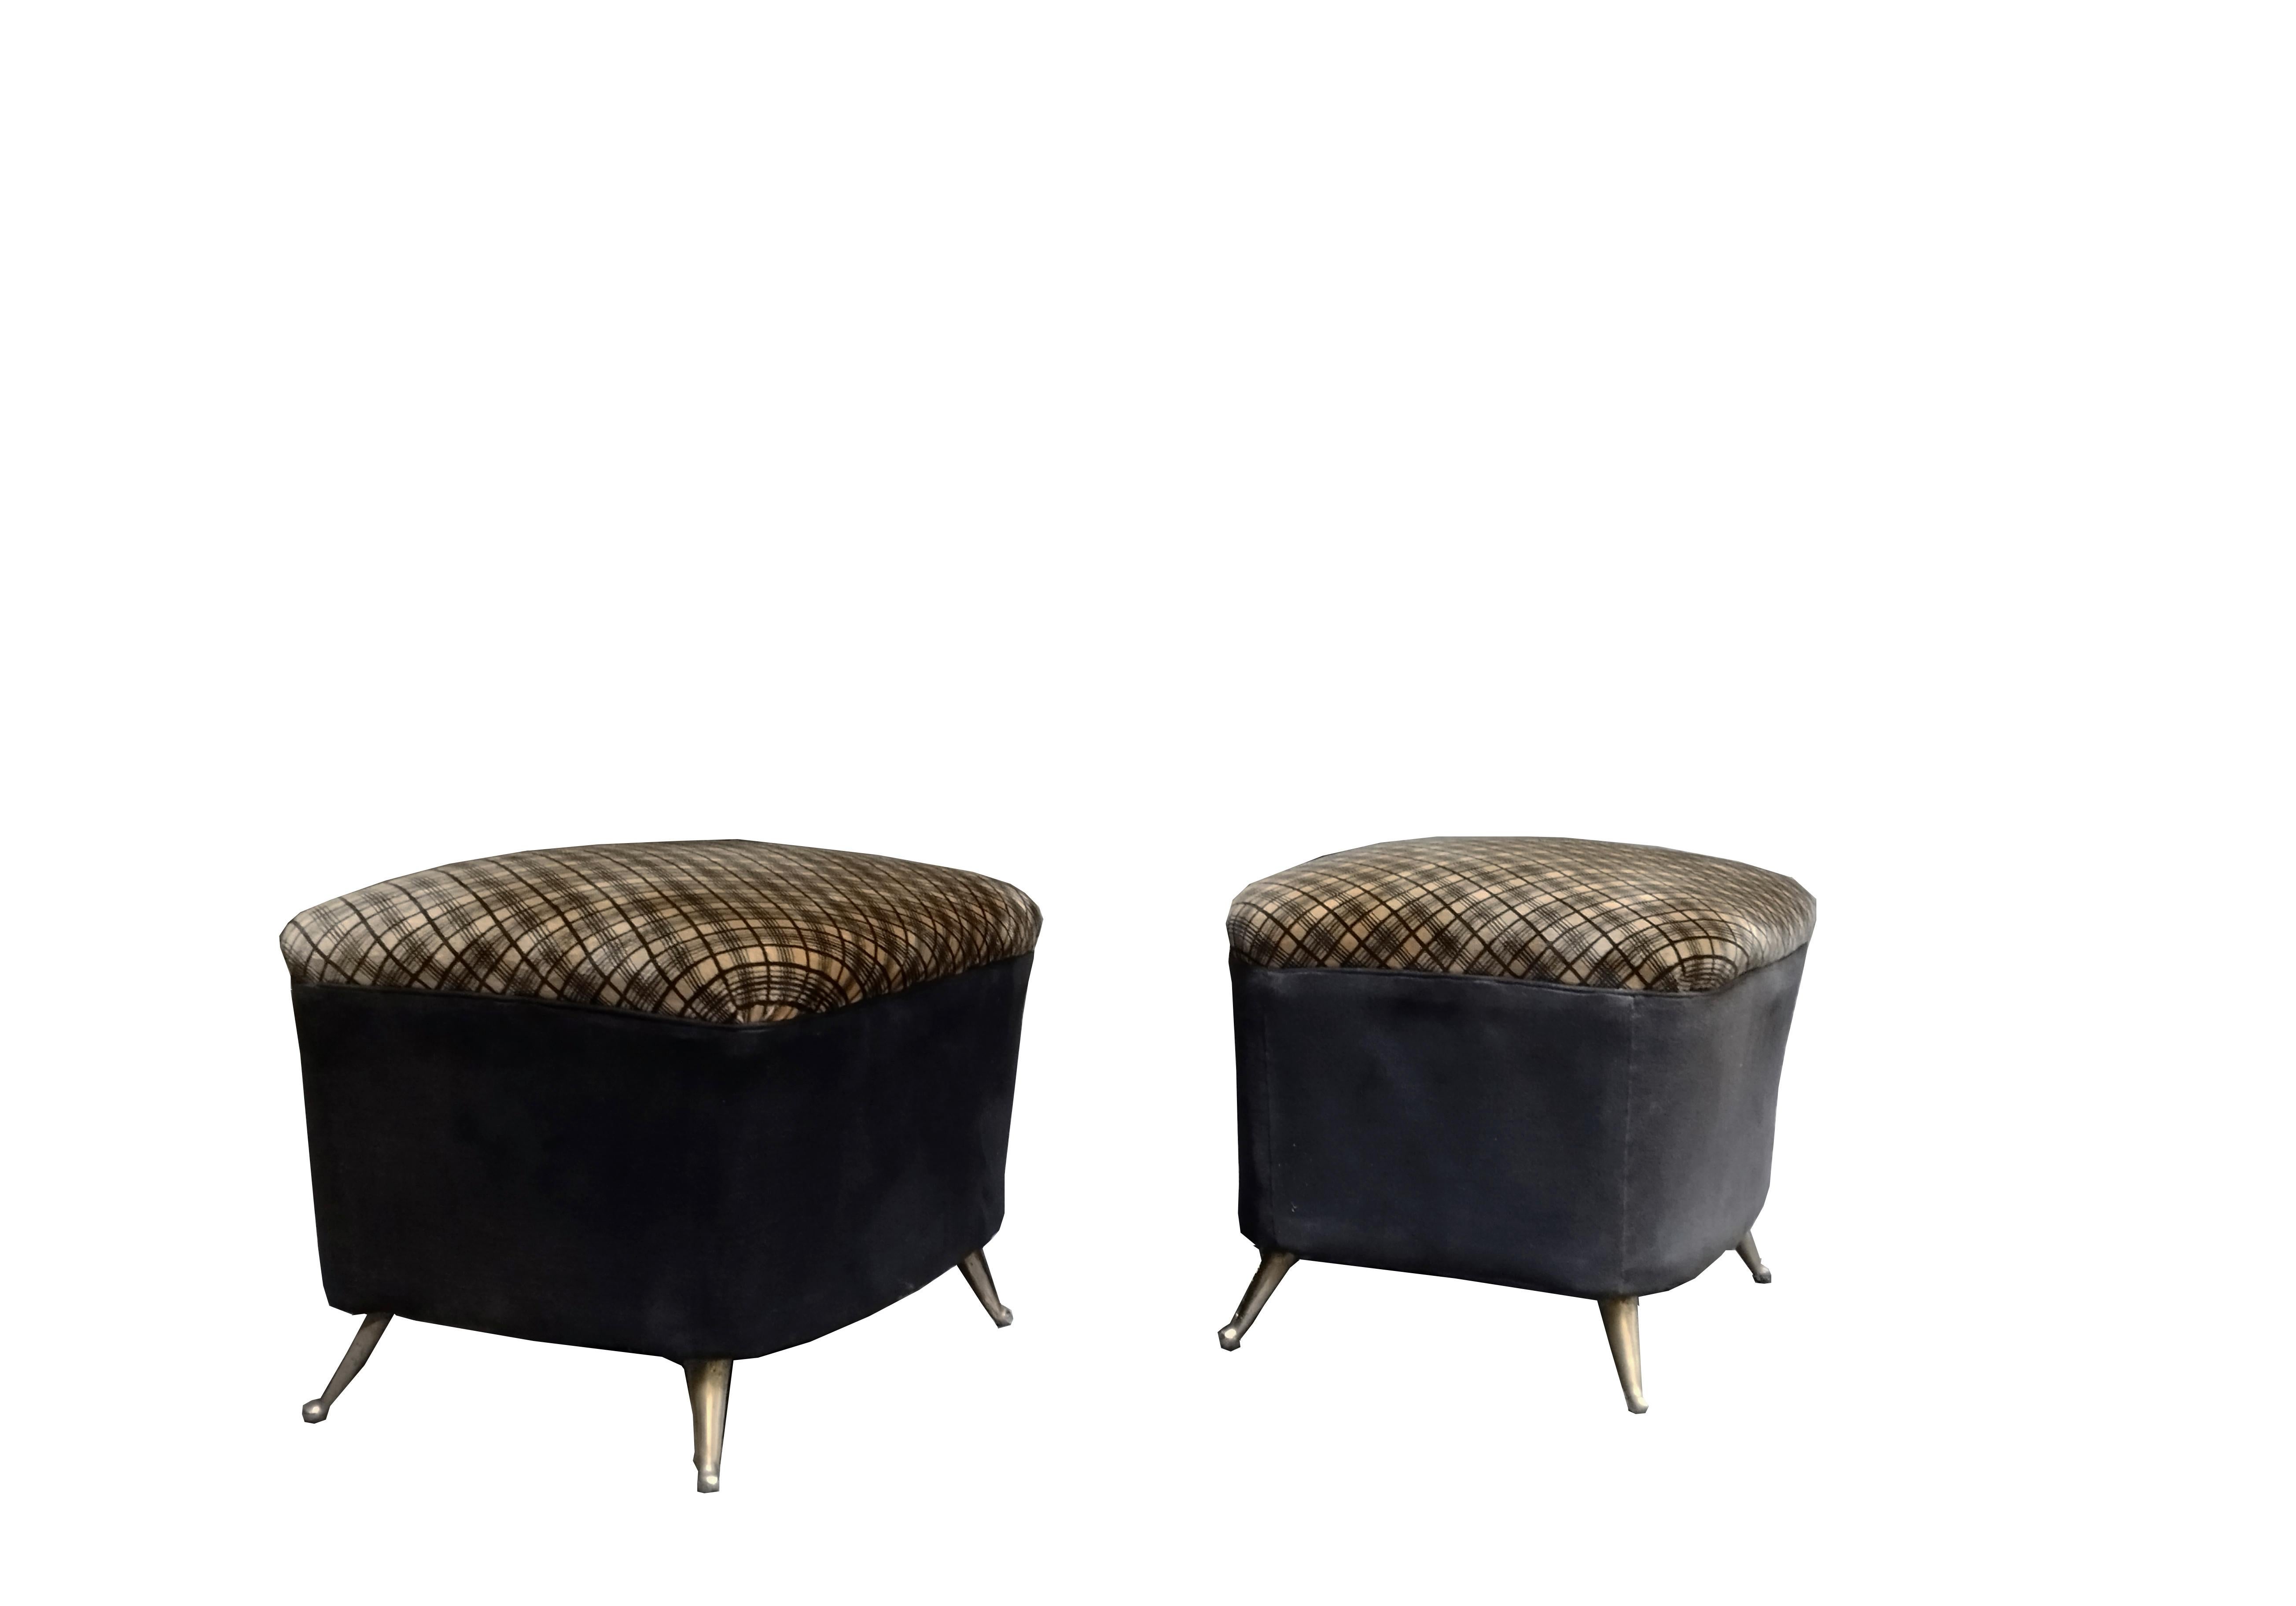 Original pair of 1950s Italian stools in original velvet and brass feet.